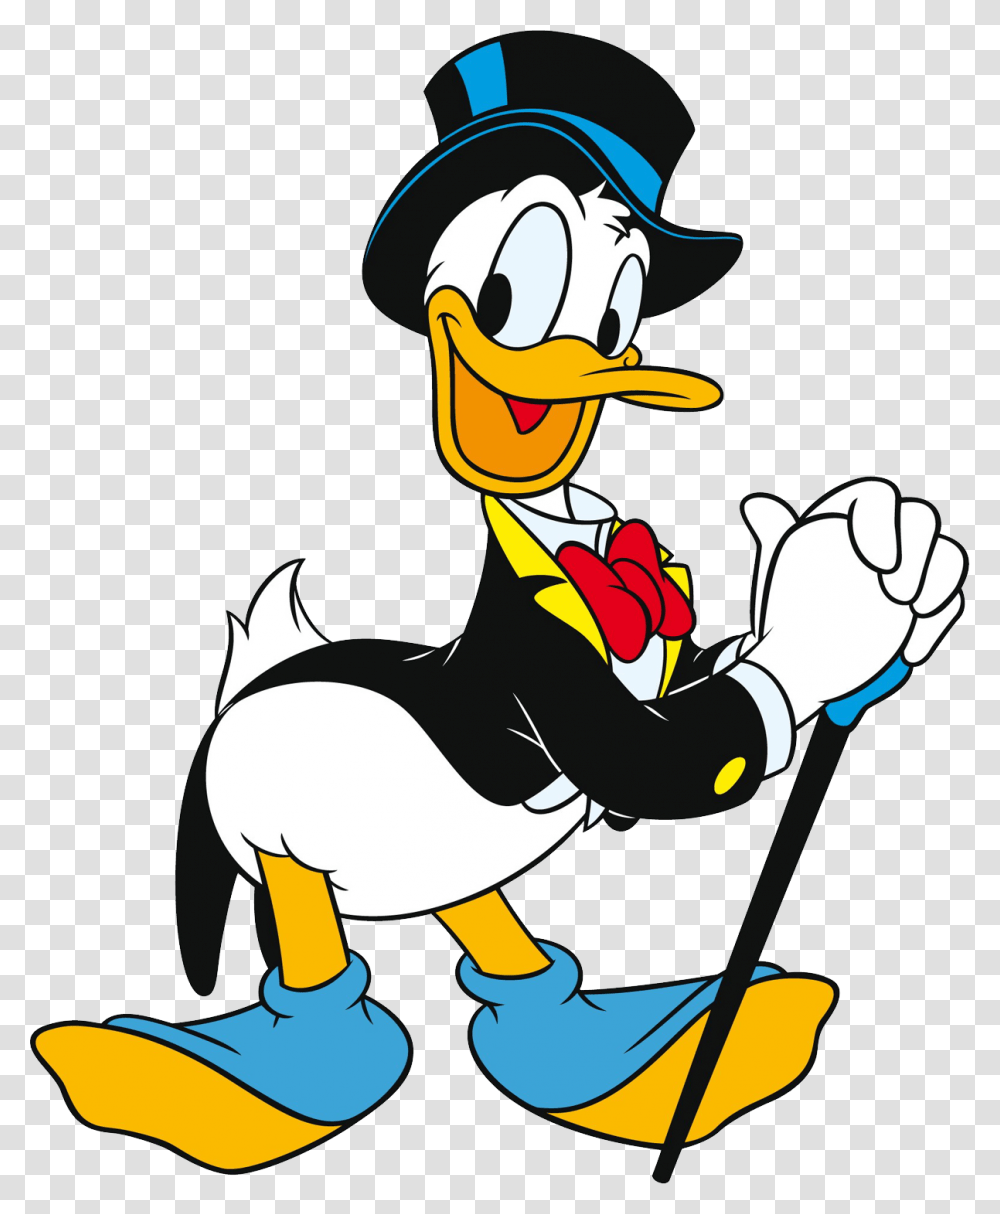 Donald Duck Cartoons Pictures